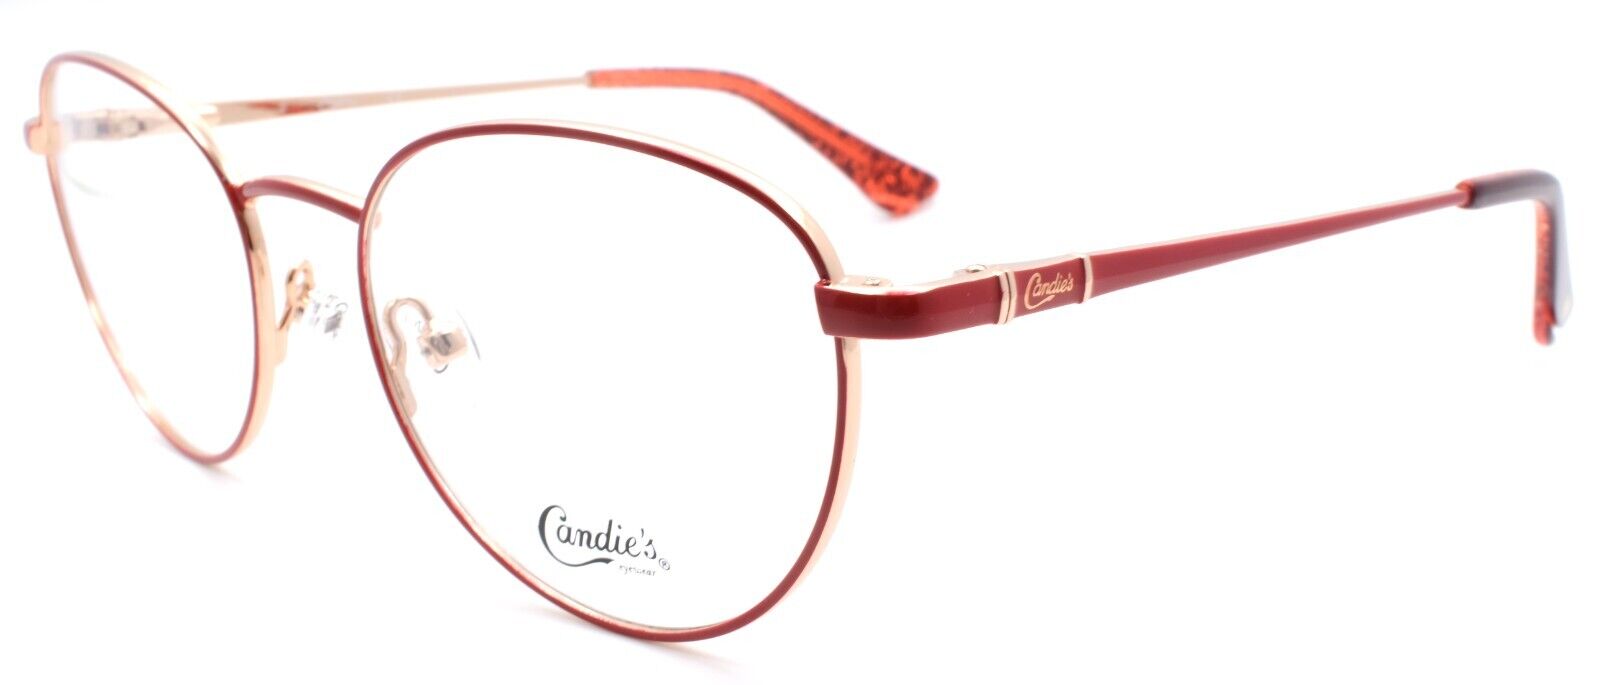 1-Candies CA0168 066 Women's Eyeglasses Frames 50-18-135 Shiny Red-889214032713-IKSpecs